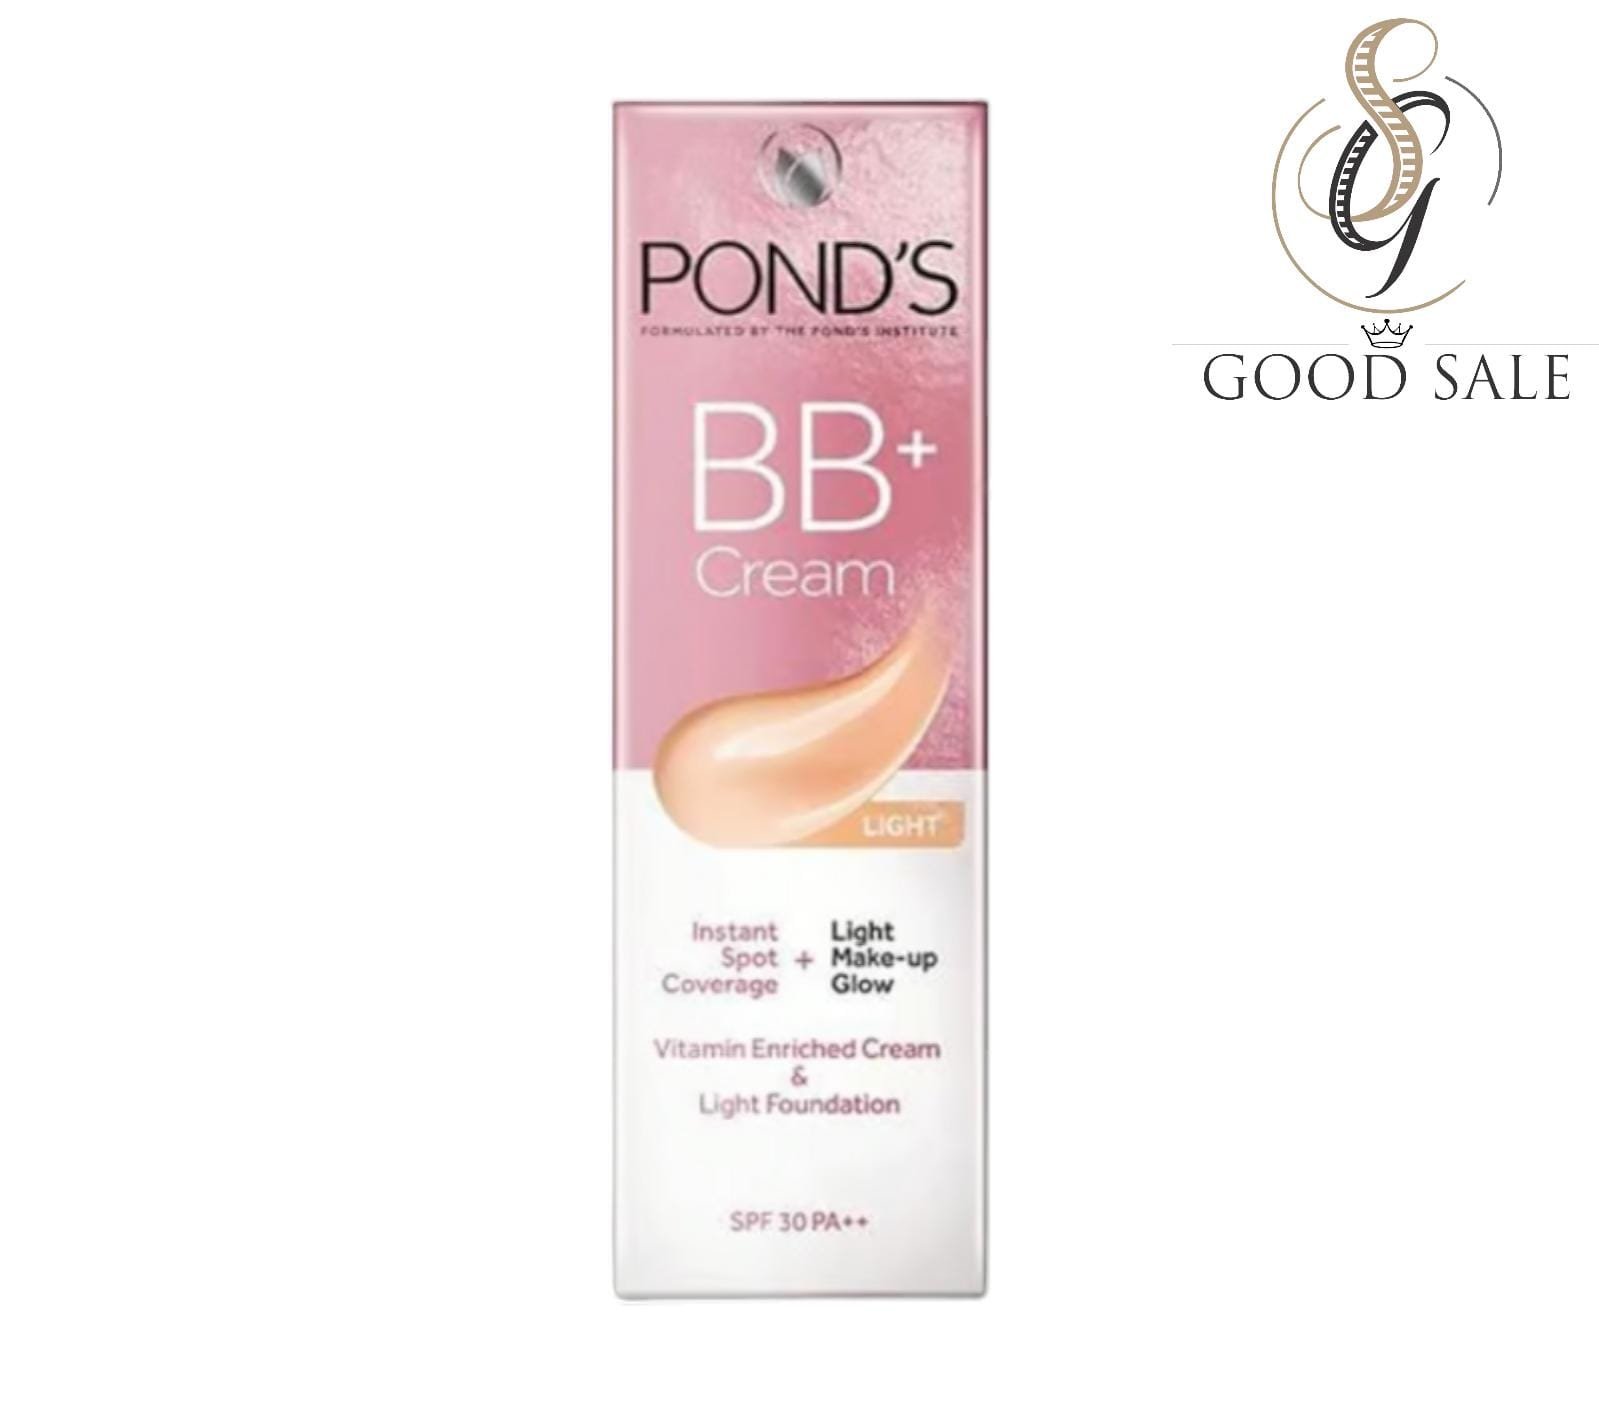 Pond's BB cream